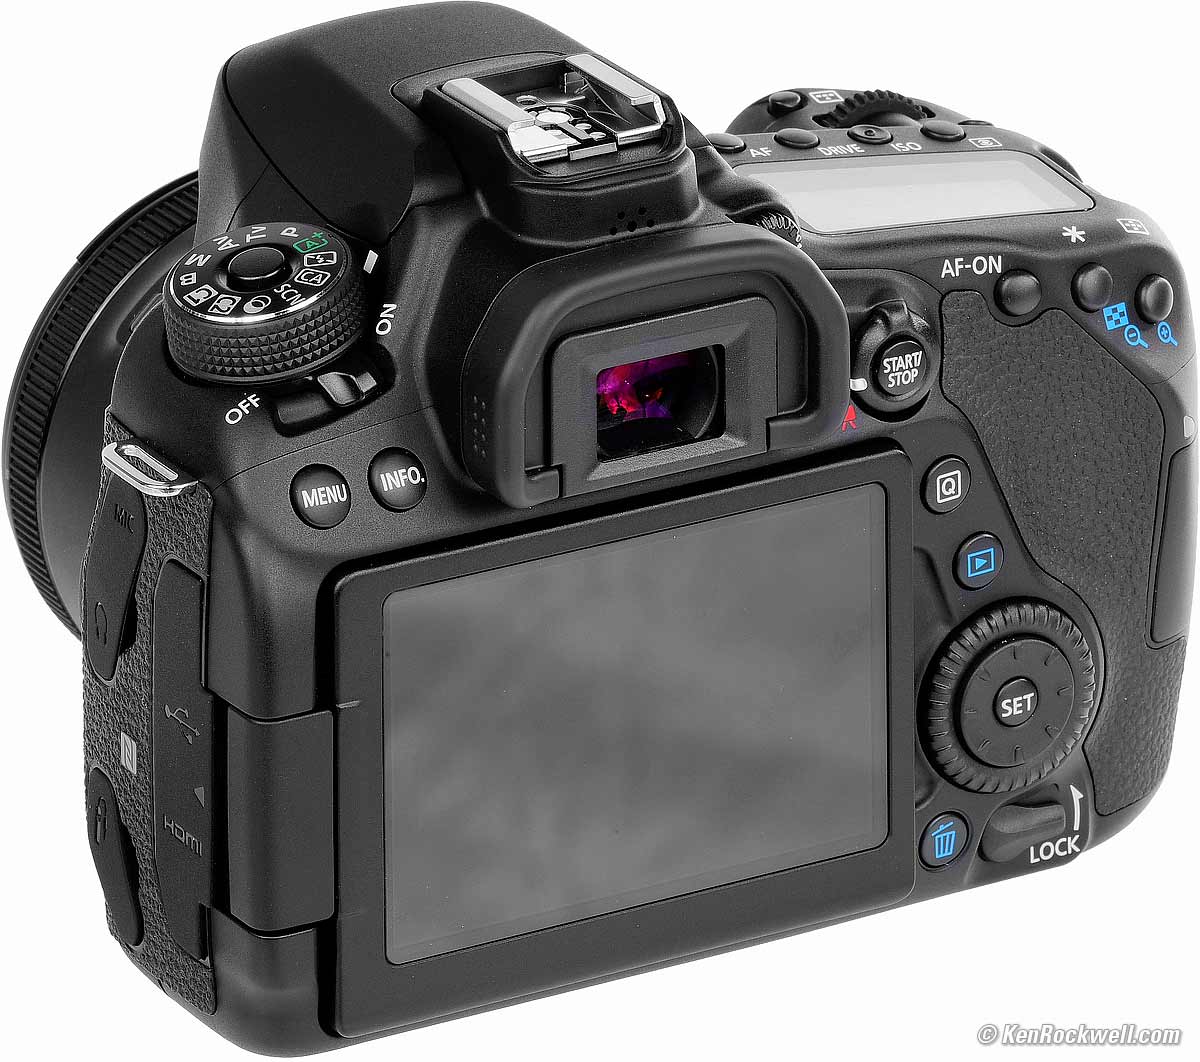 Canon 80D Review